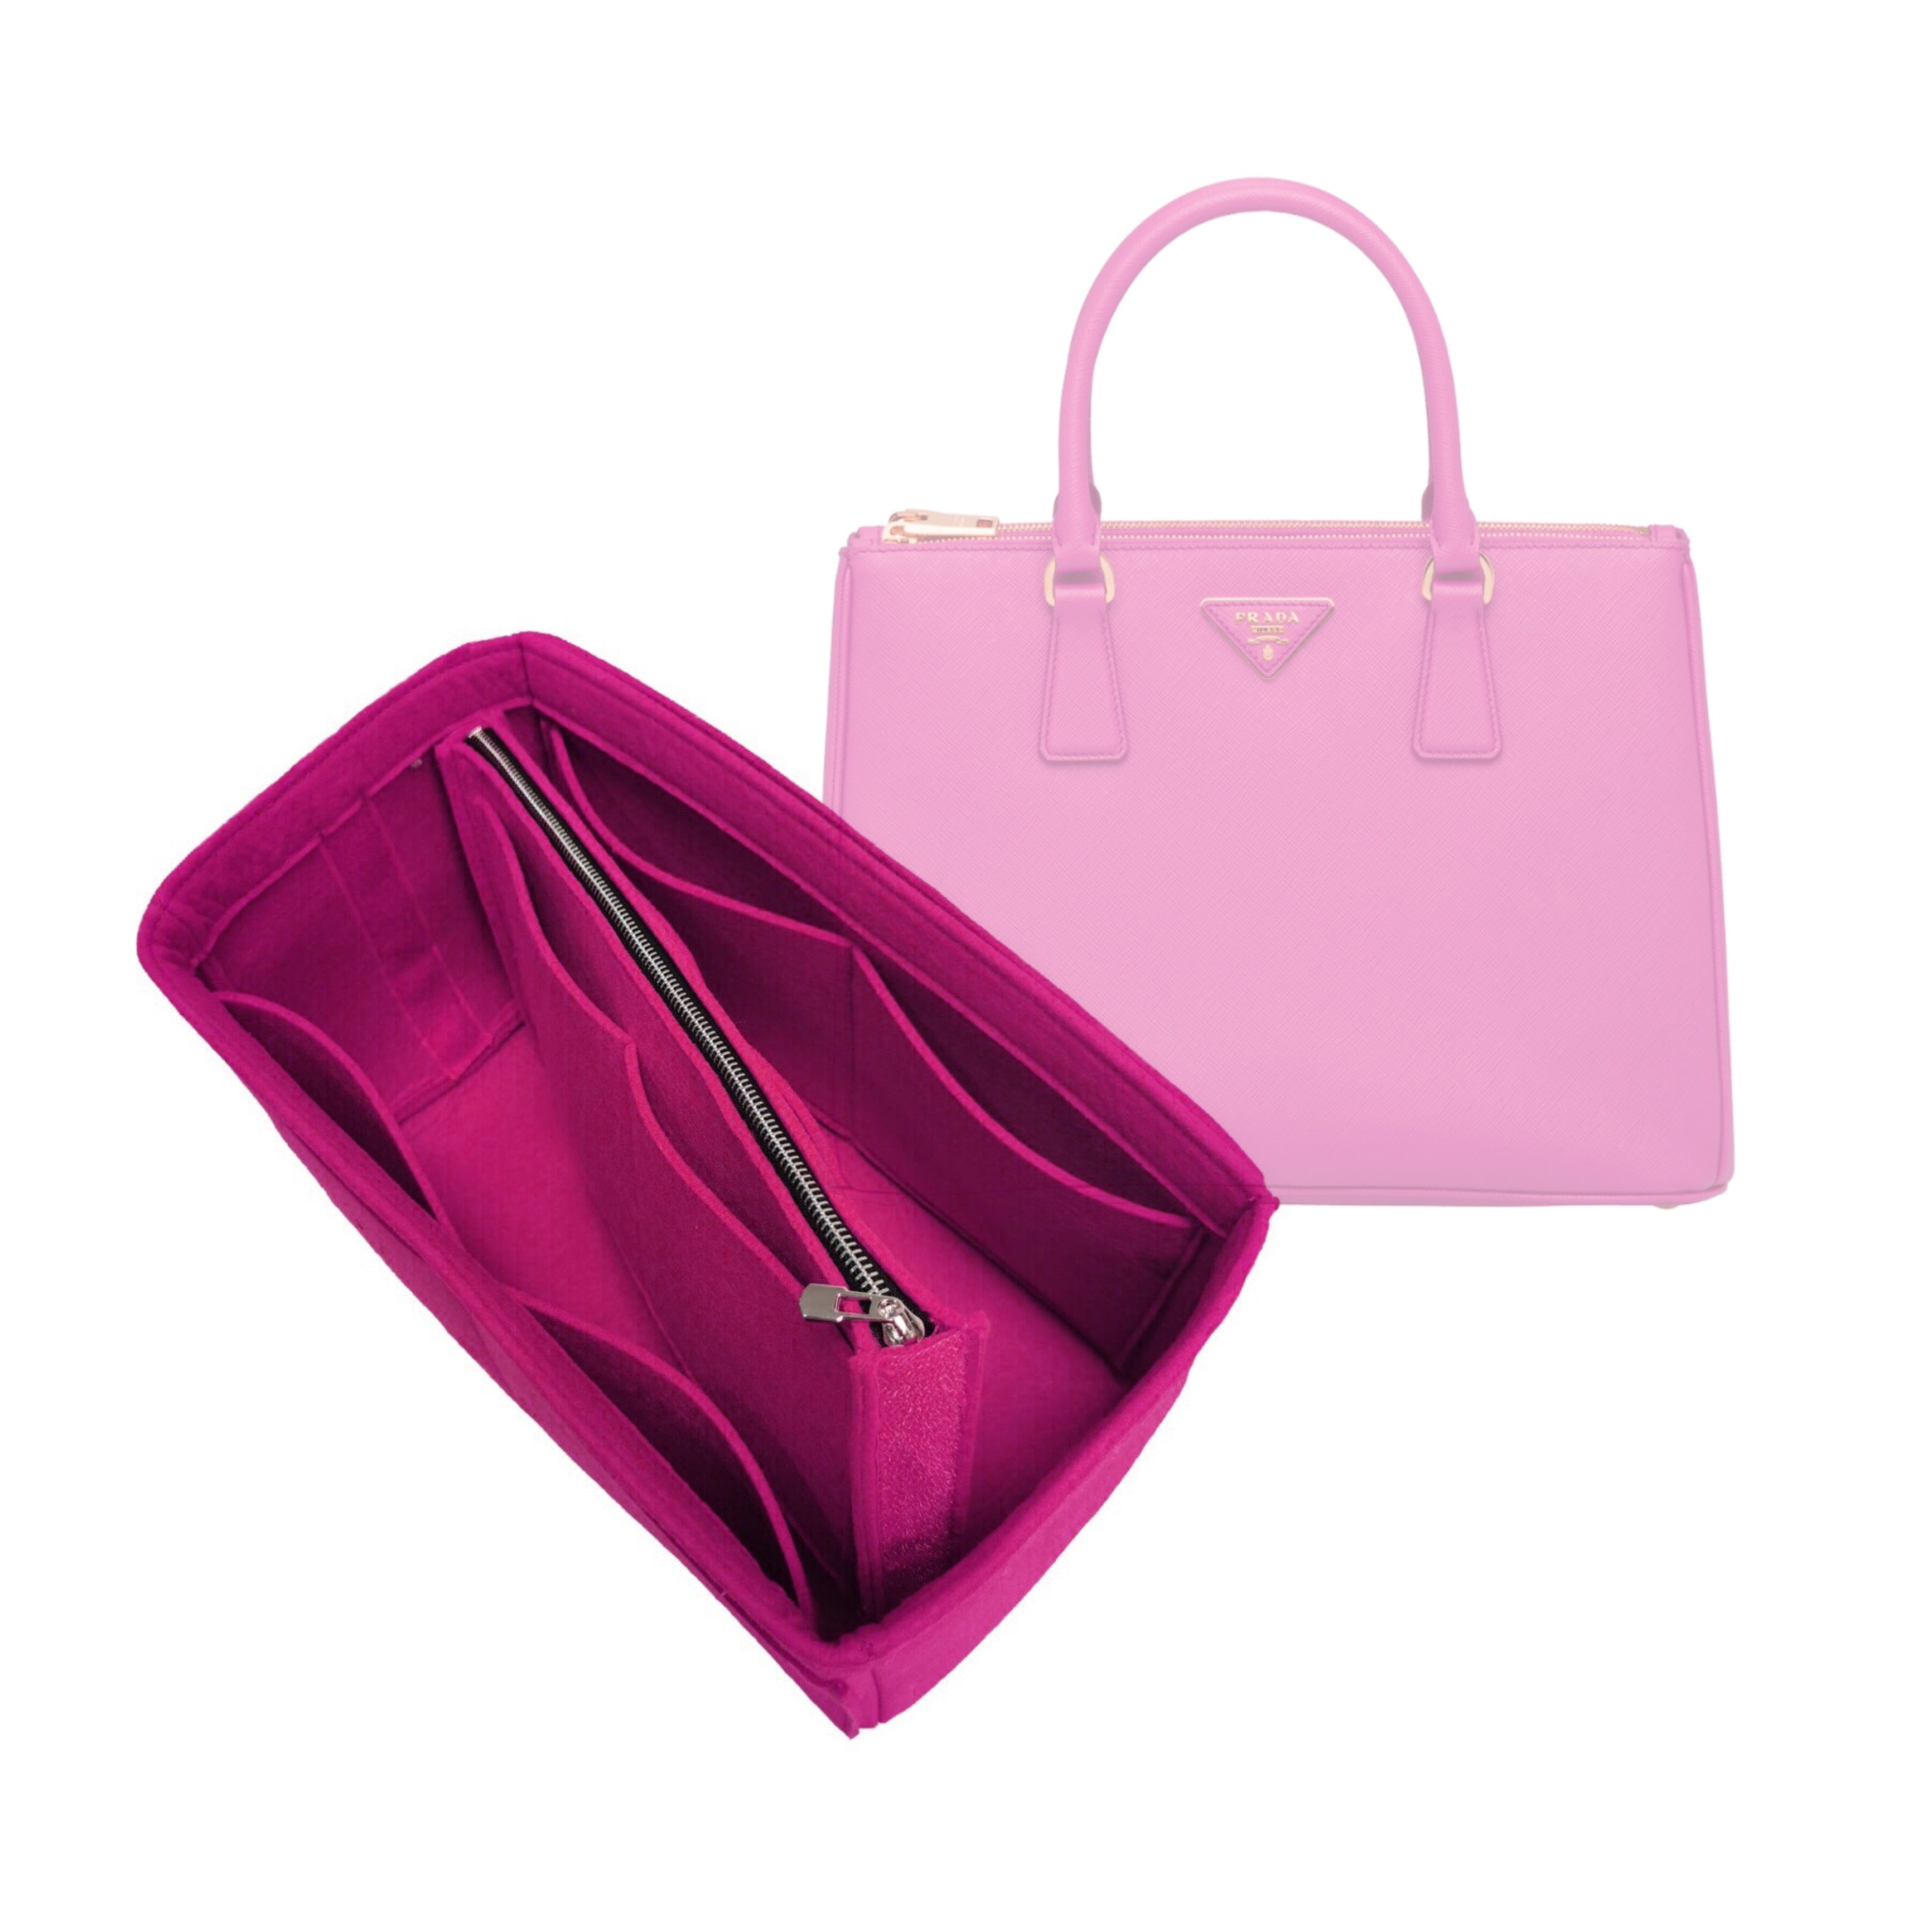 BaginBag | Handbag Organizer for Prada Galleria Bag  | Designer Purse Insert  | Bag Insert Organizerr | Tote bag organizer  Organizer inserts for handbag|  Bag Organizer | Luxury bag |  Organizer inserts for handbags